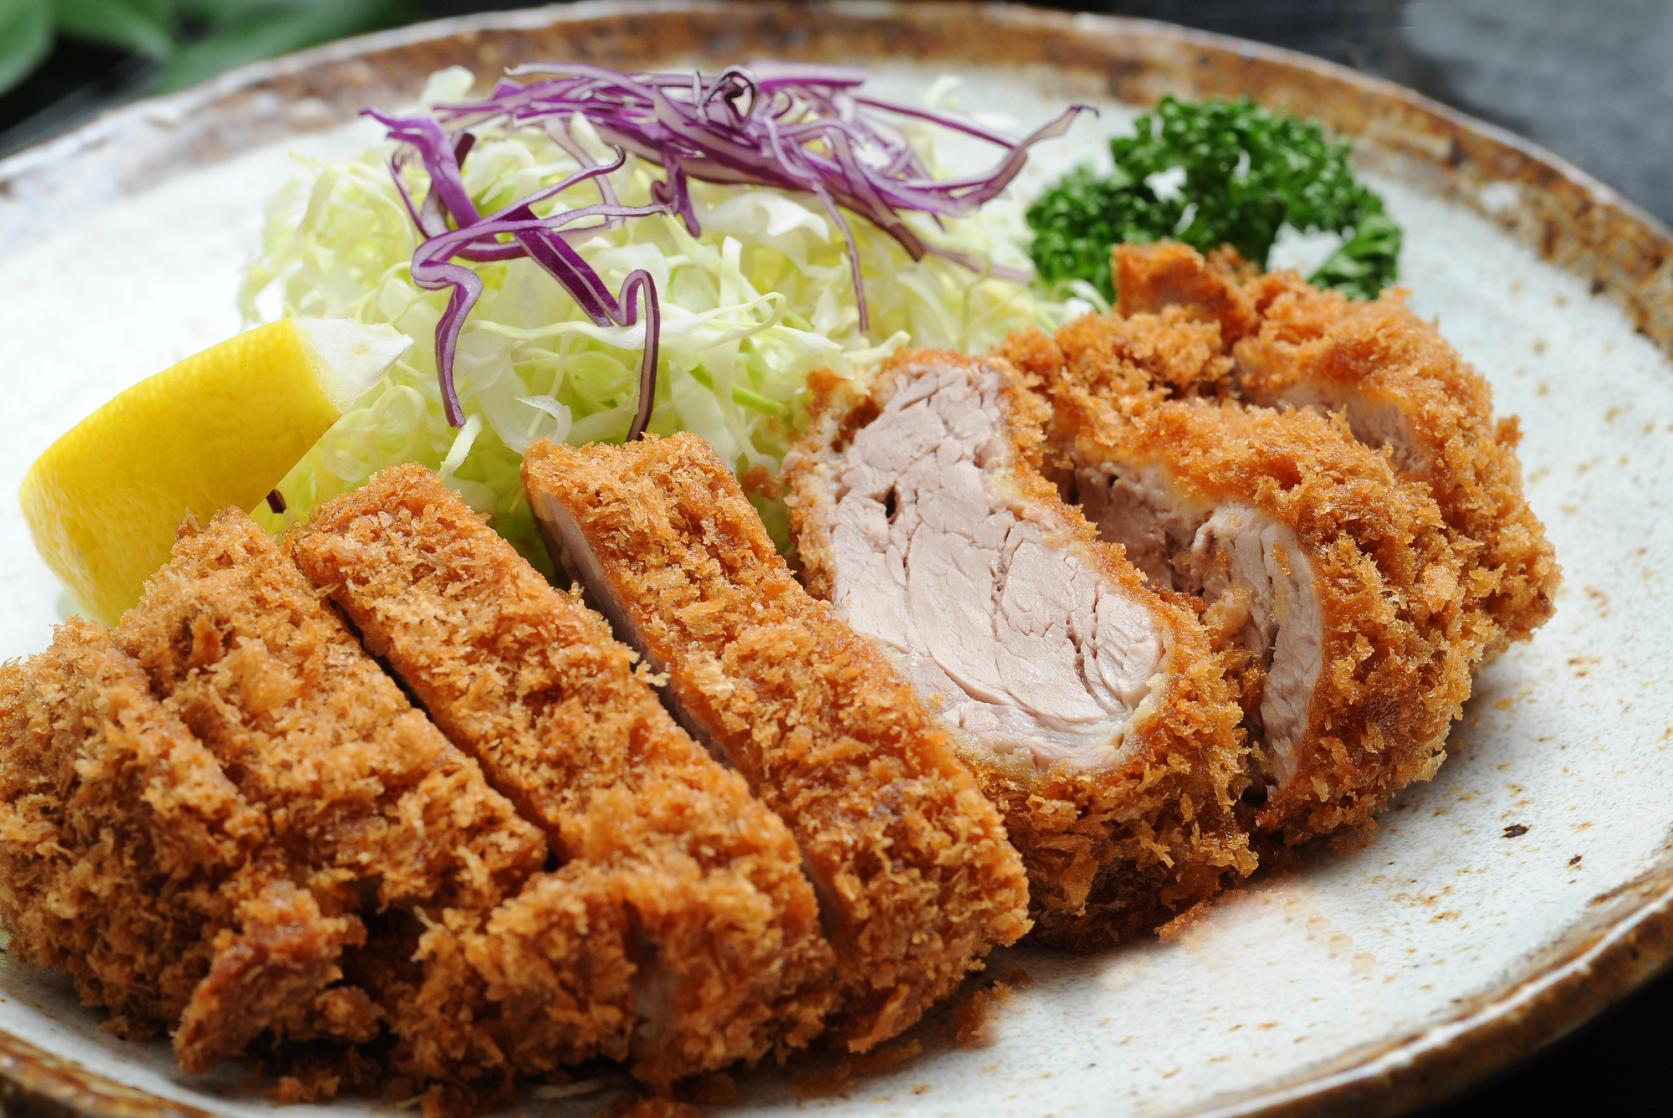 According to some study results, Kagoshima kurobuta pork, a world famous brand, is 4 times tastier than ordinary pork.-0